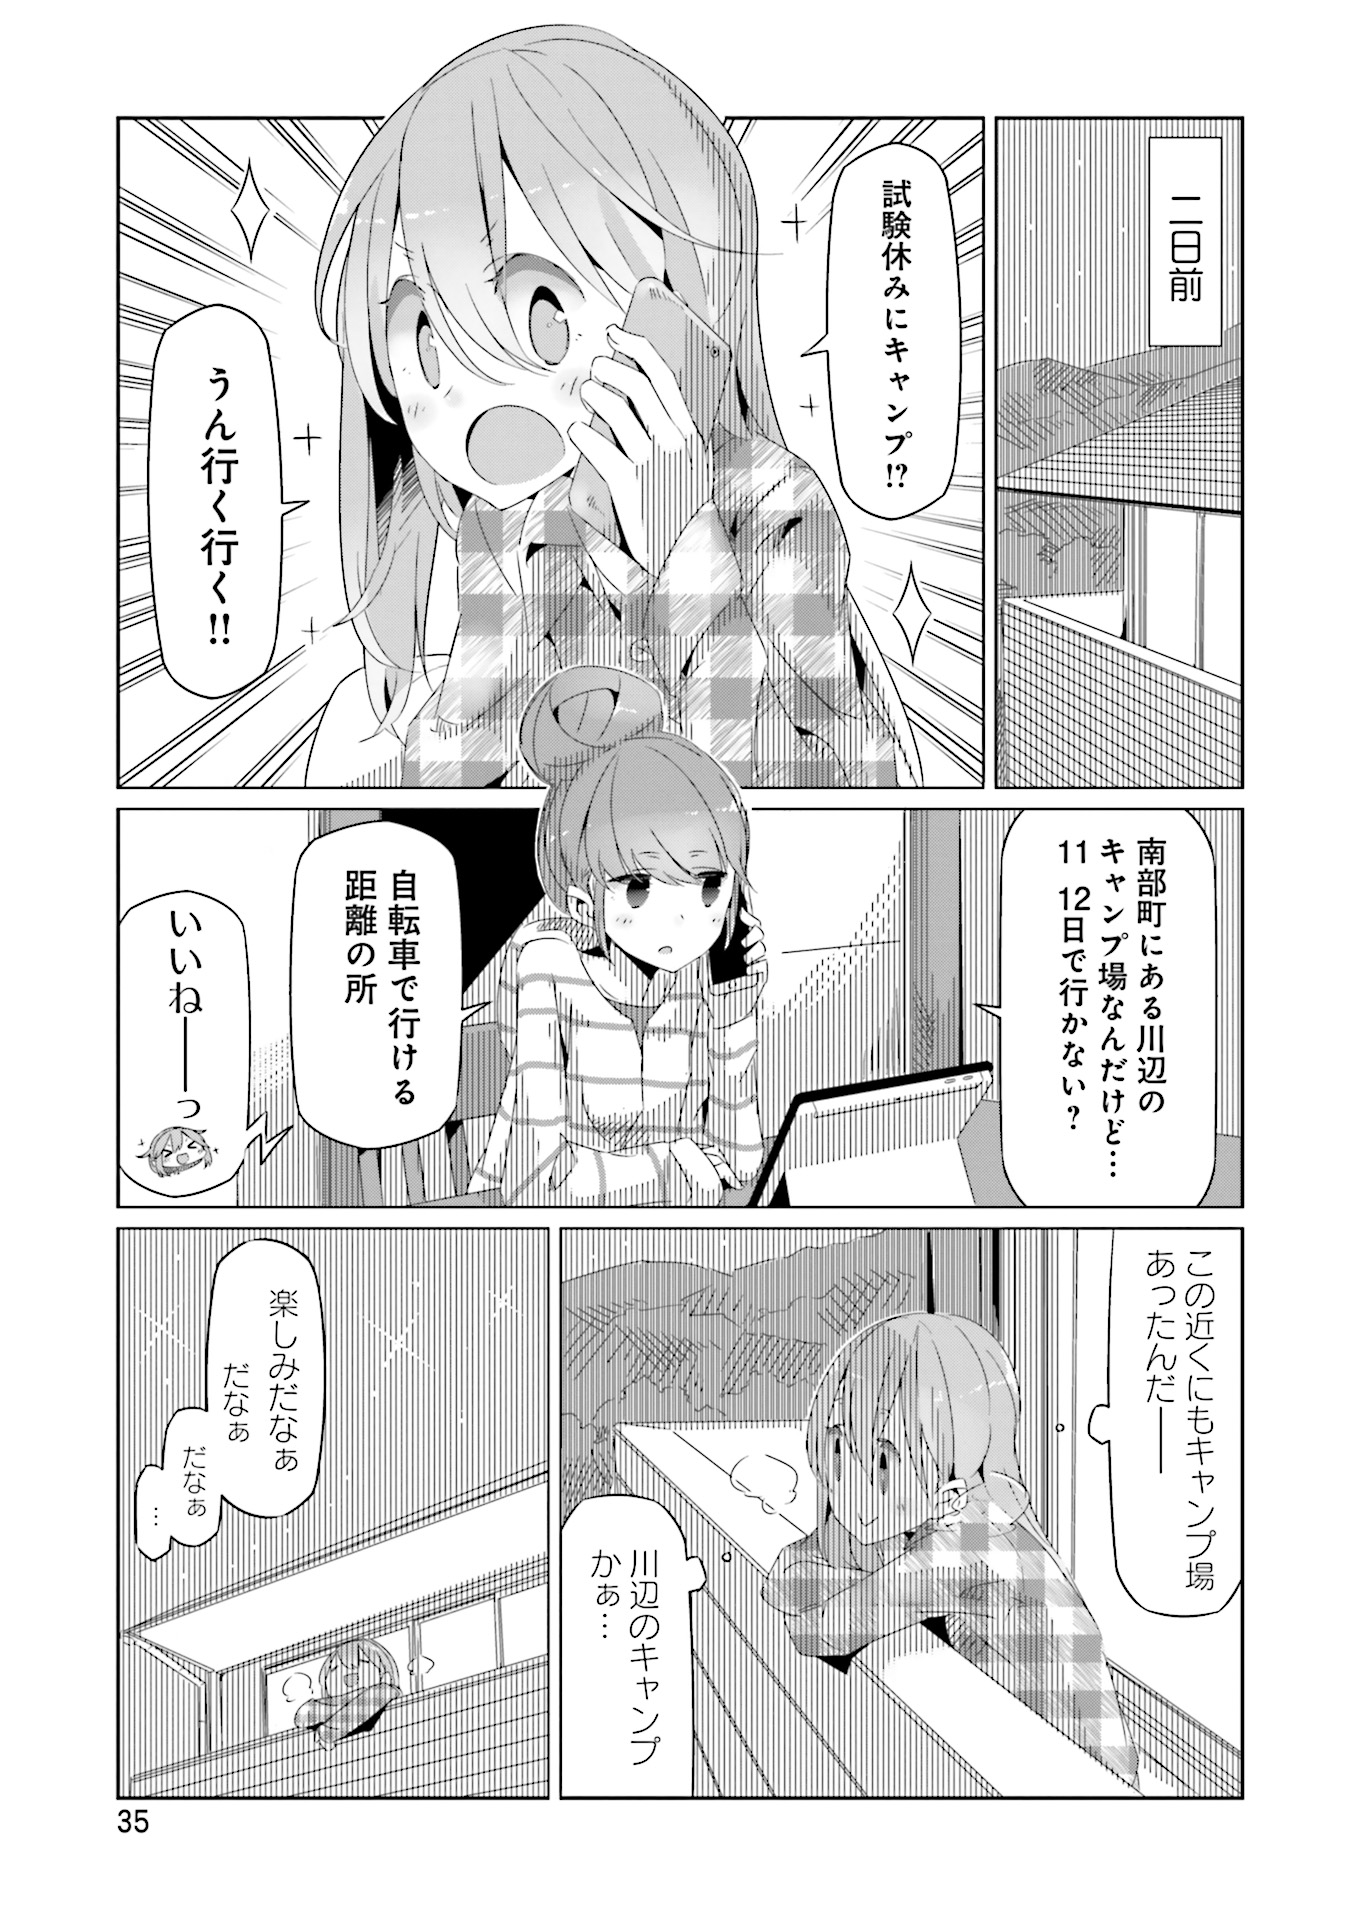 Yuru Camp - Chapter 15 - Page 3